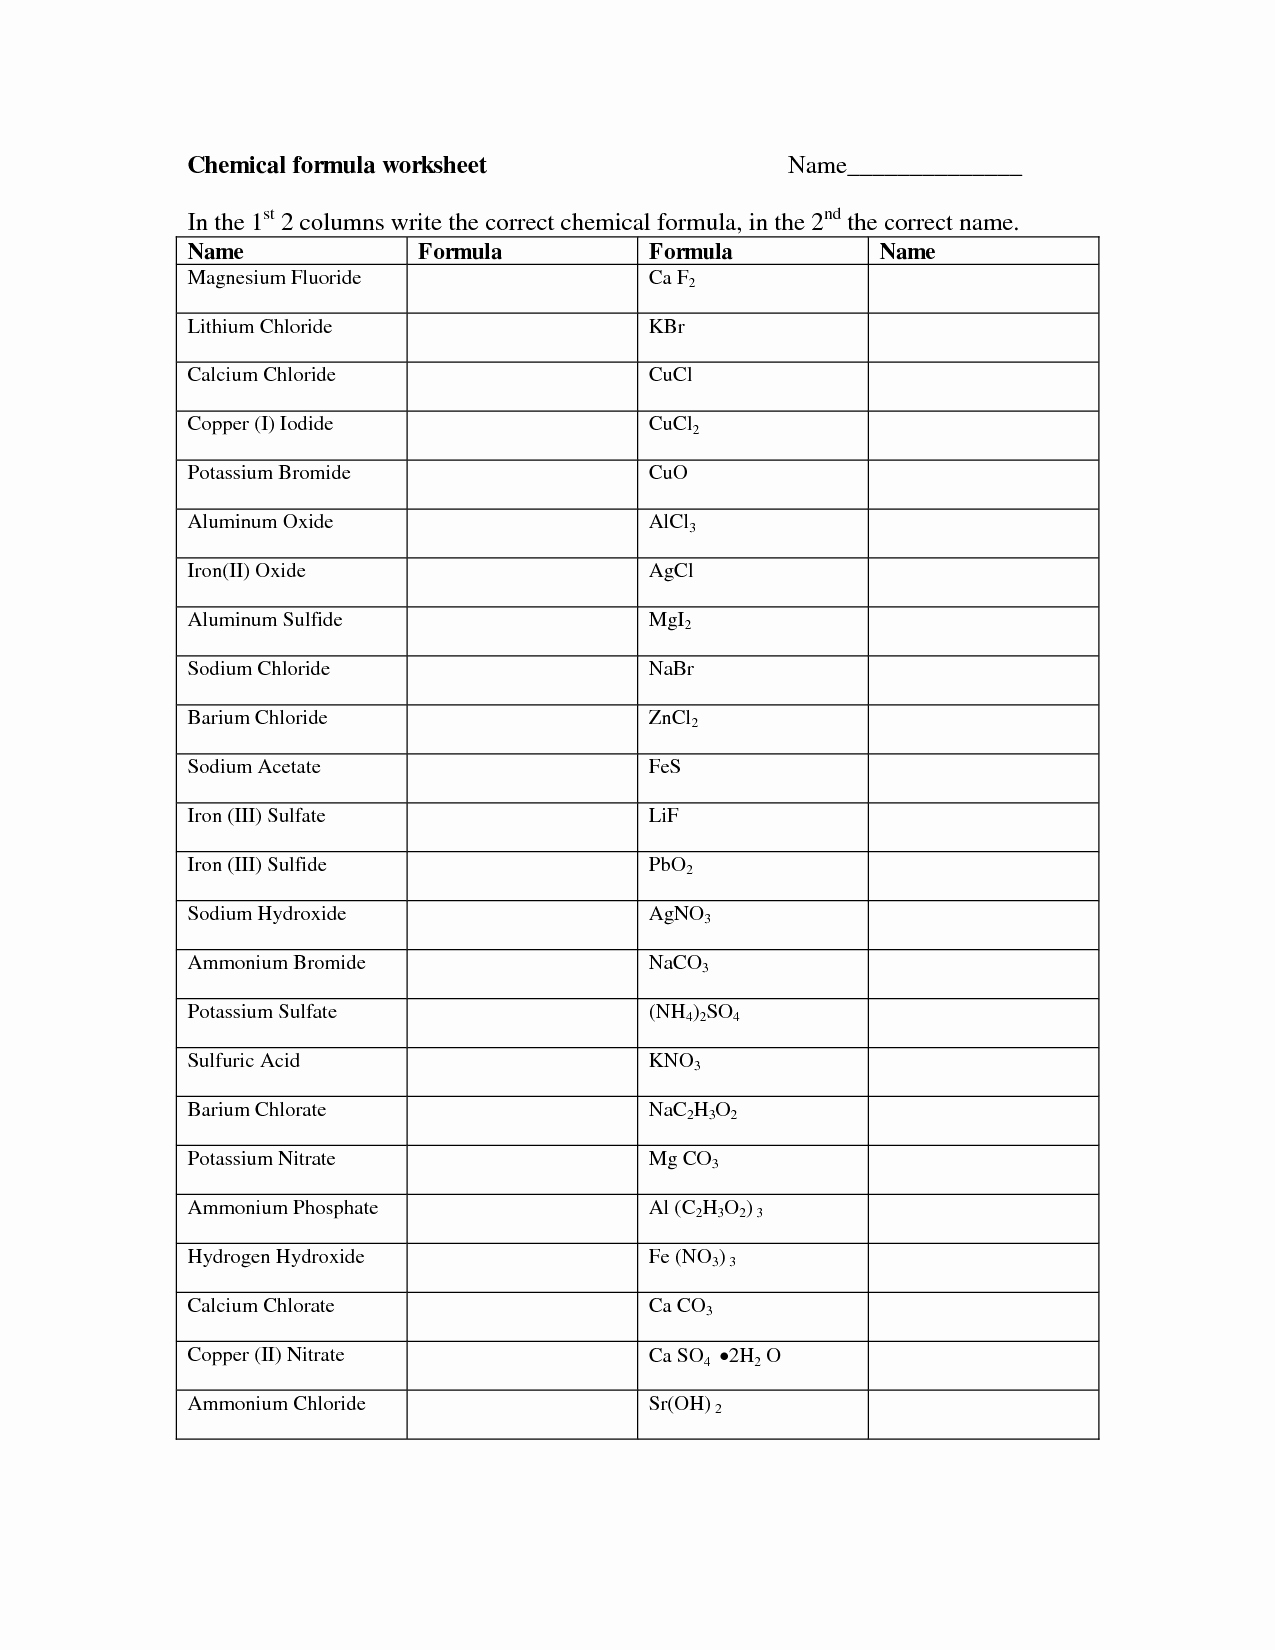 Chemical formula Worksheet Answers Awesome 14 Best Of Easy Write Ionic formulas Worksheet